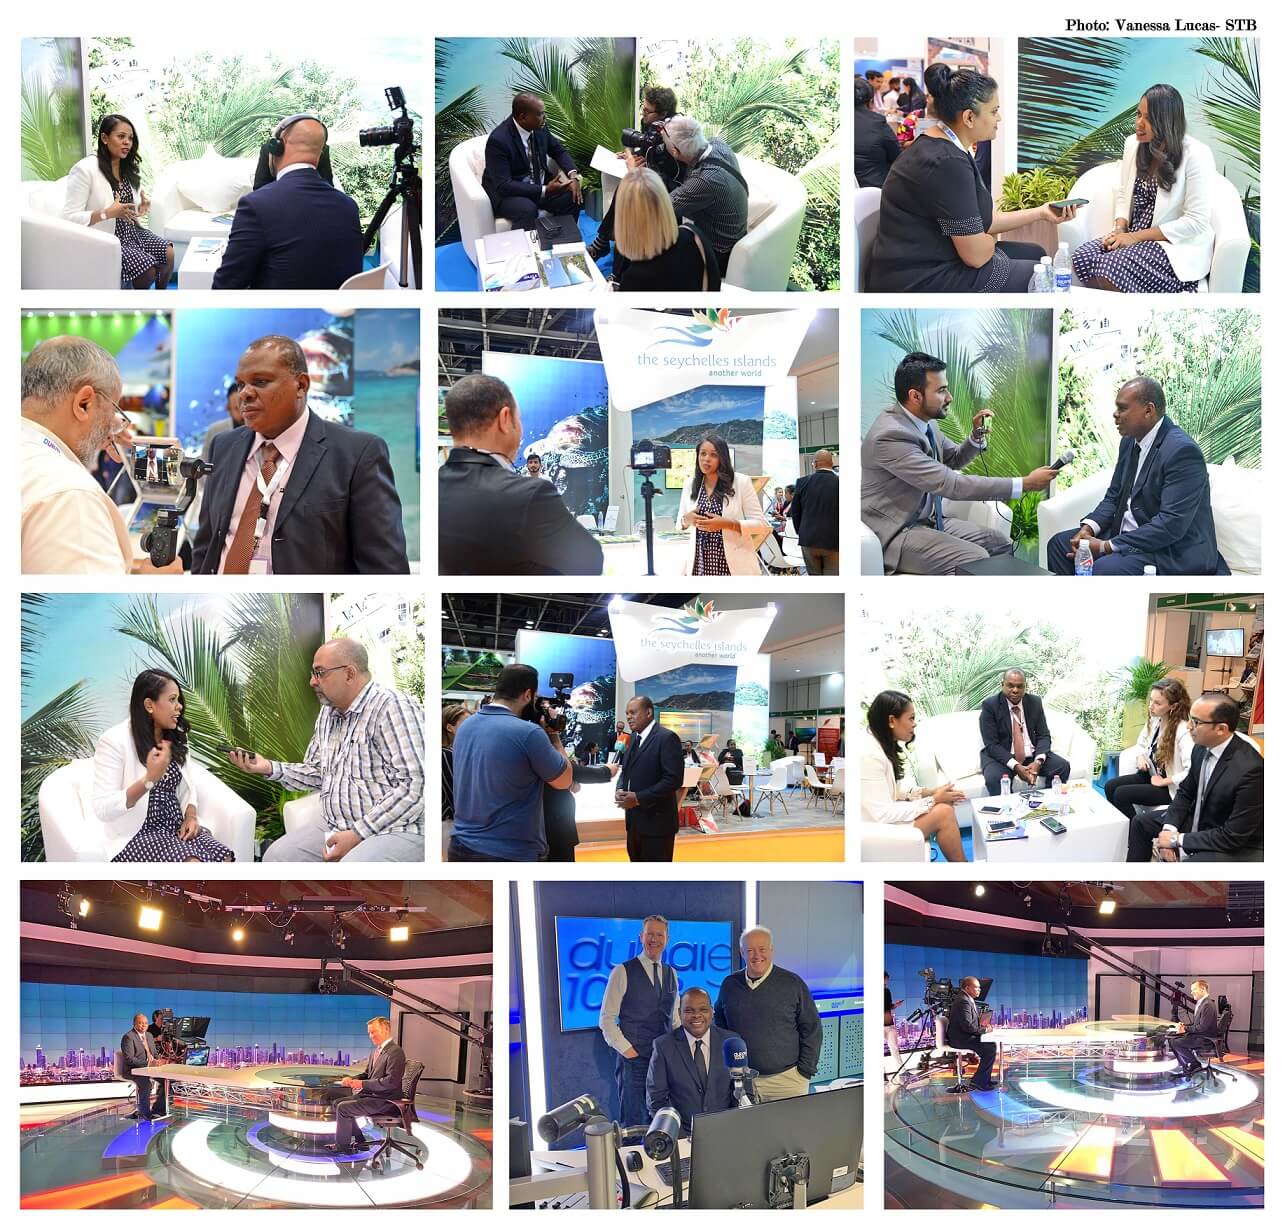 Seychelles intensifies its media presence in the GCC region